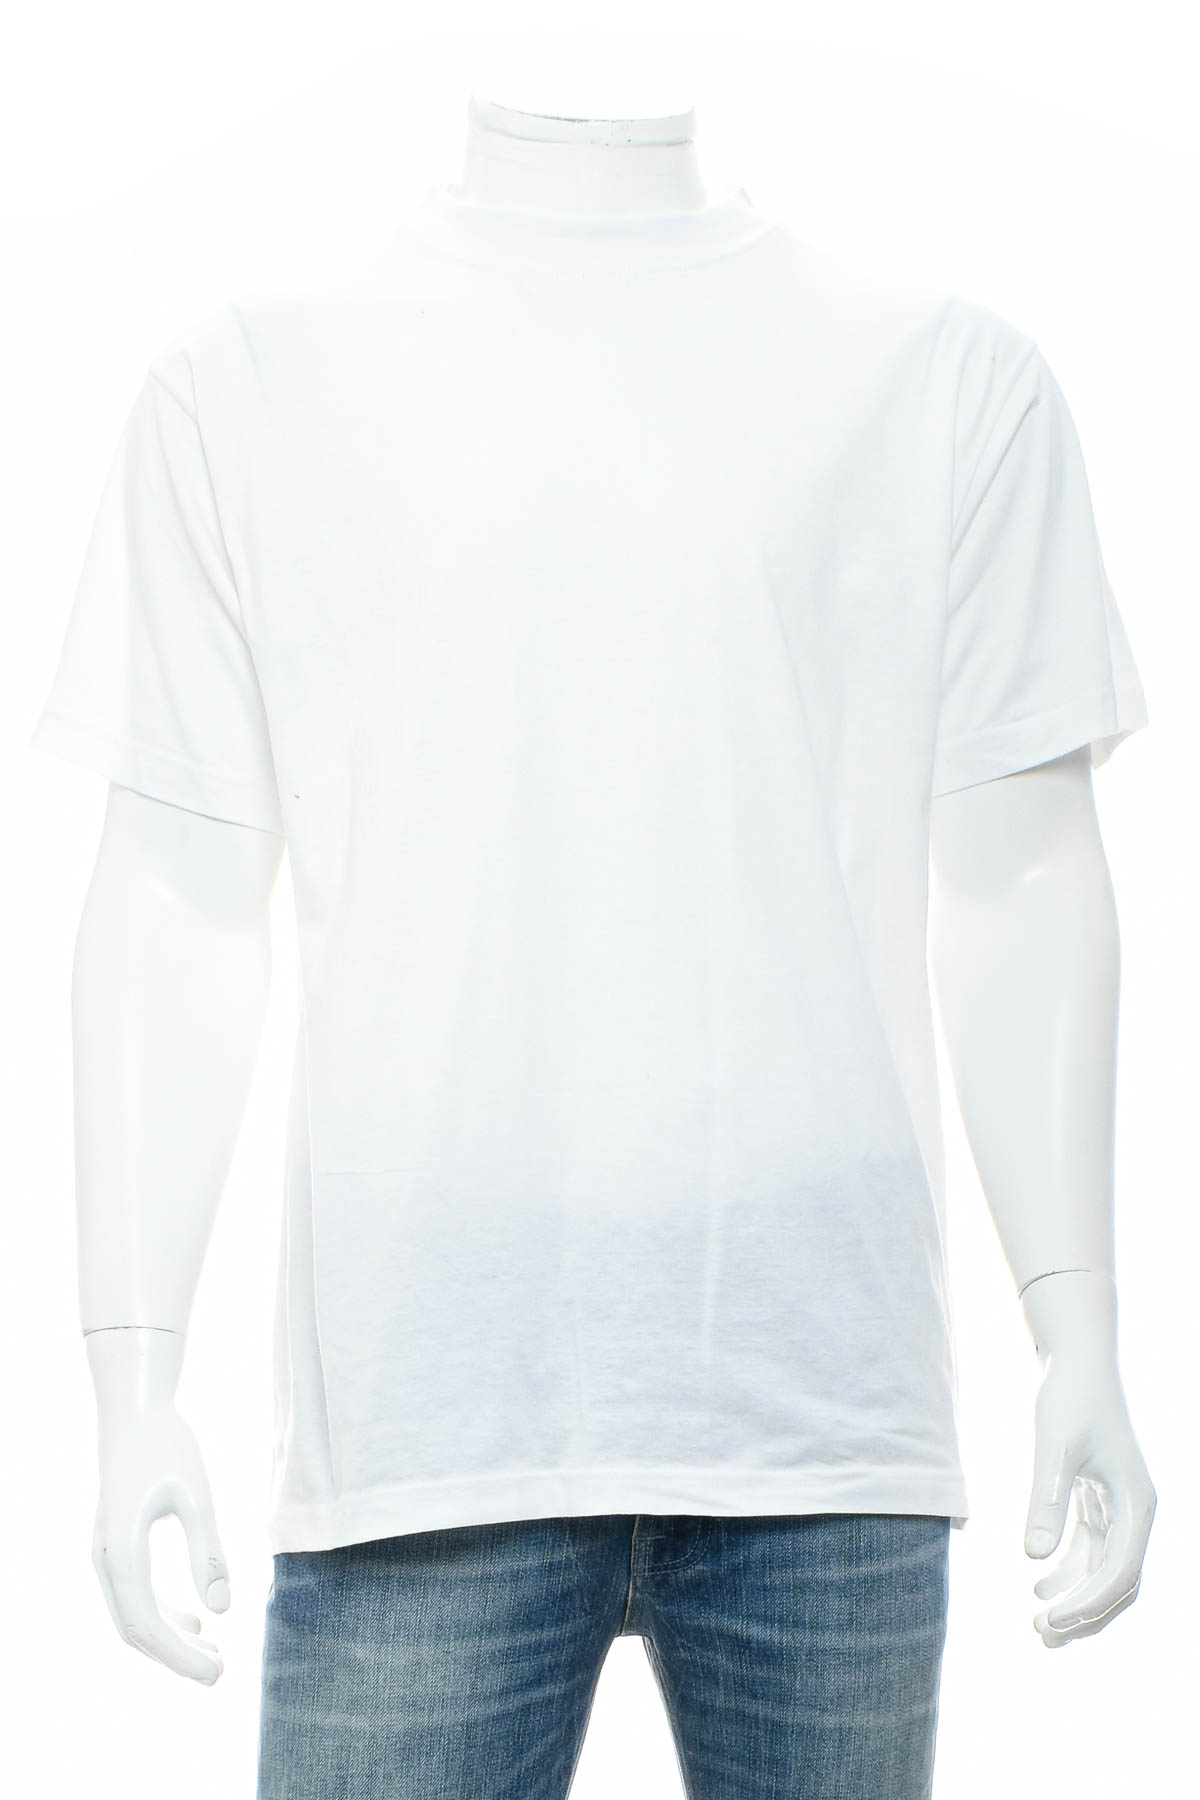 Men's T-shirt - Miami Beach - 0